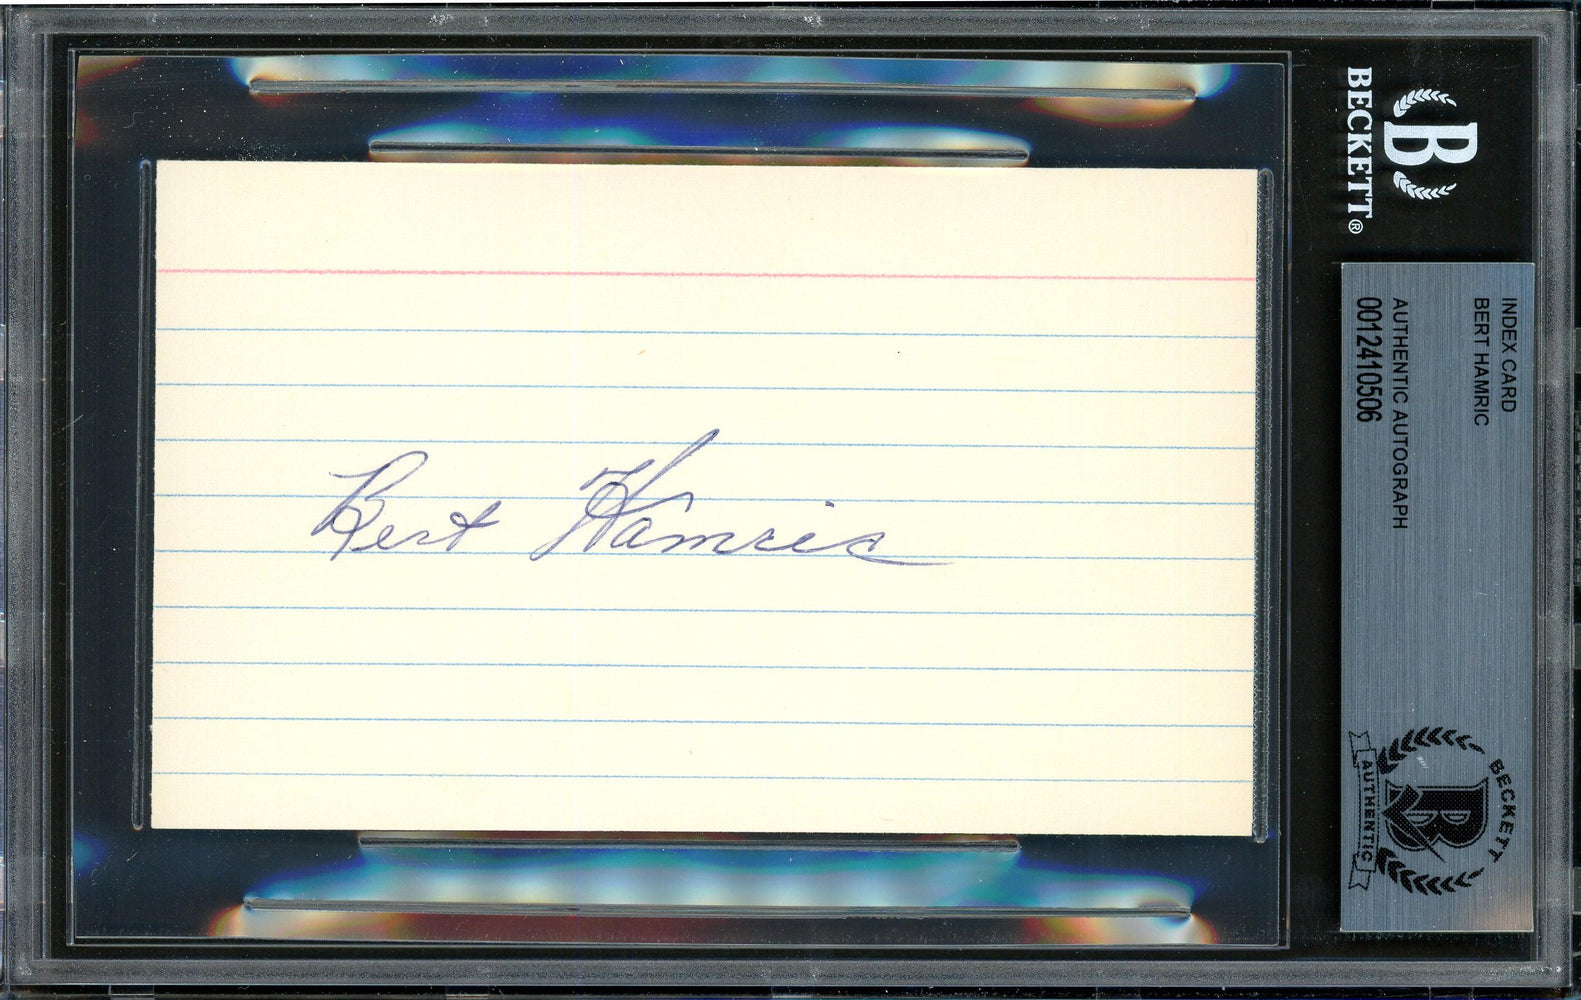 Bert Hamric Autographed 3x5 Index Card Brooklyn Dodgers Beckett BAS #12410506 - RSA